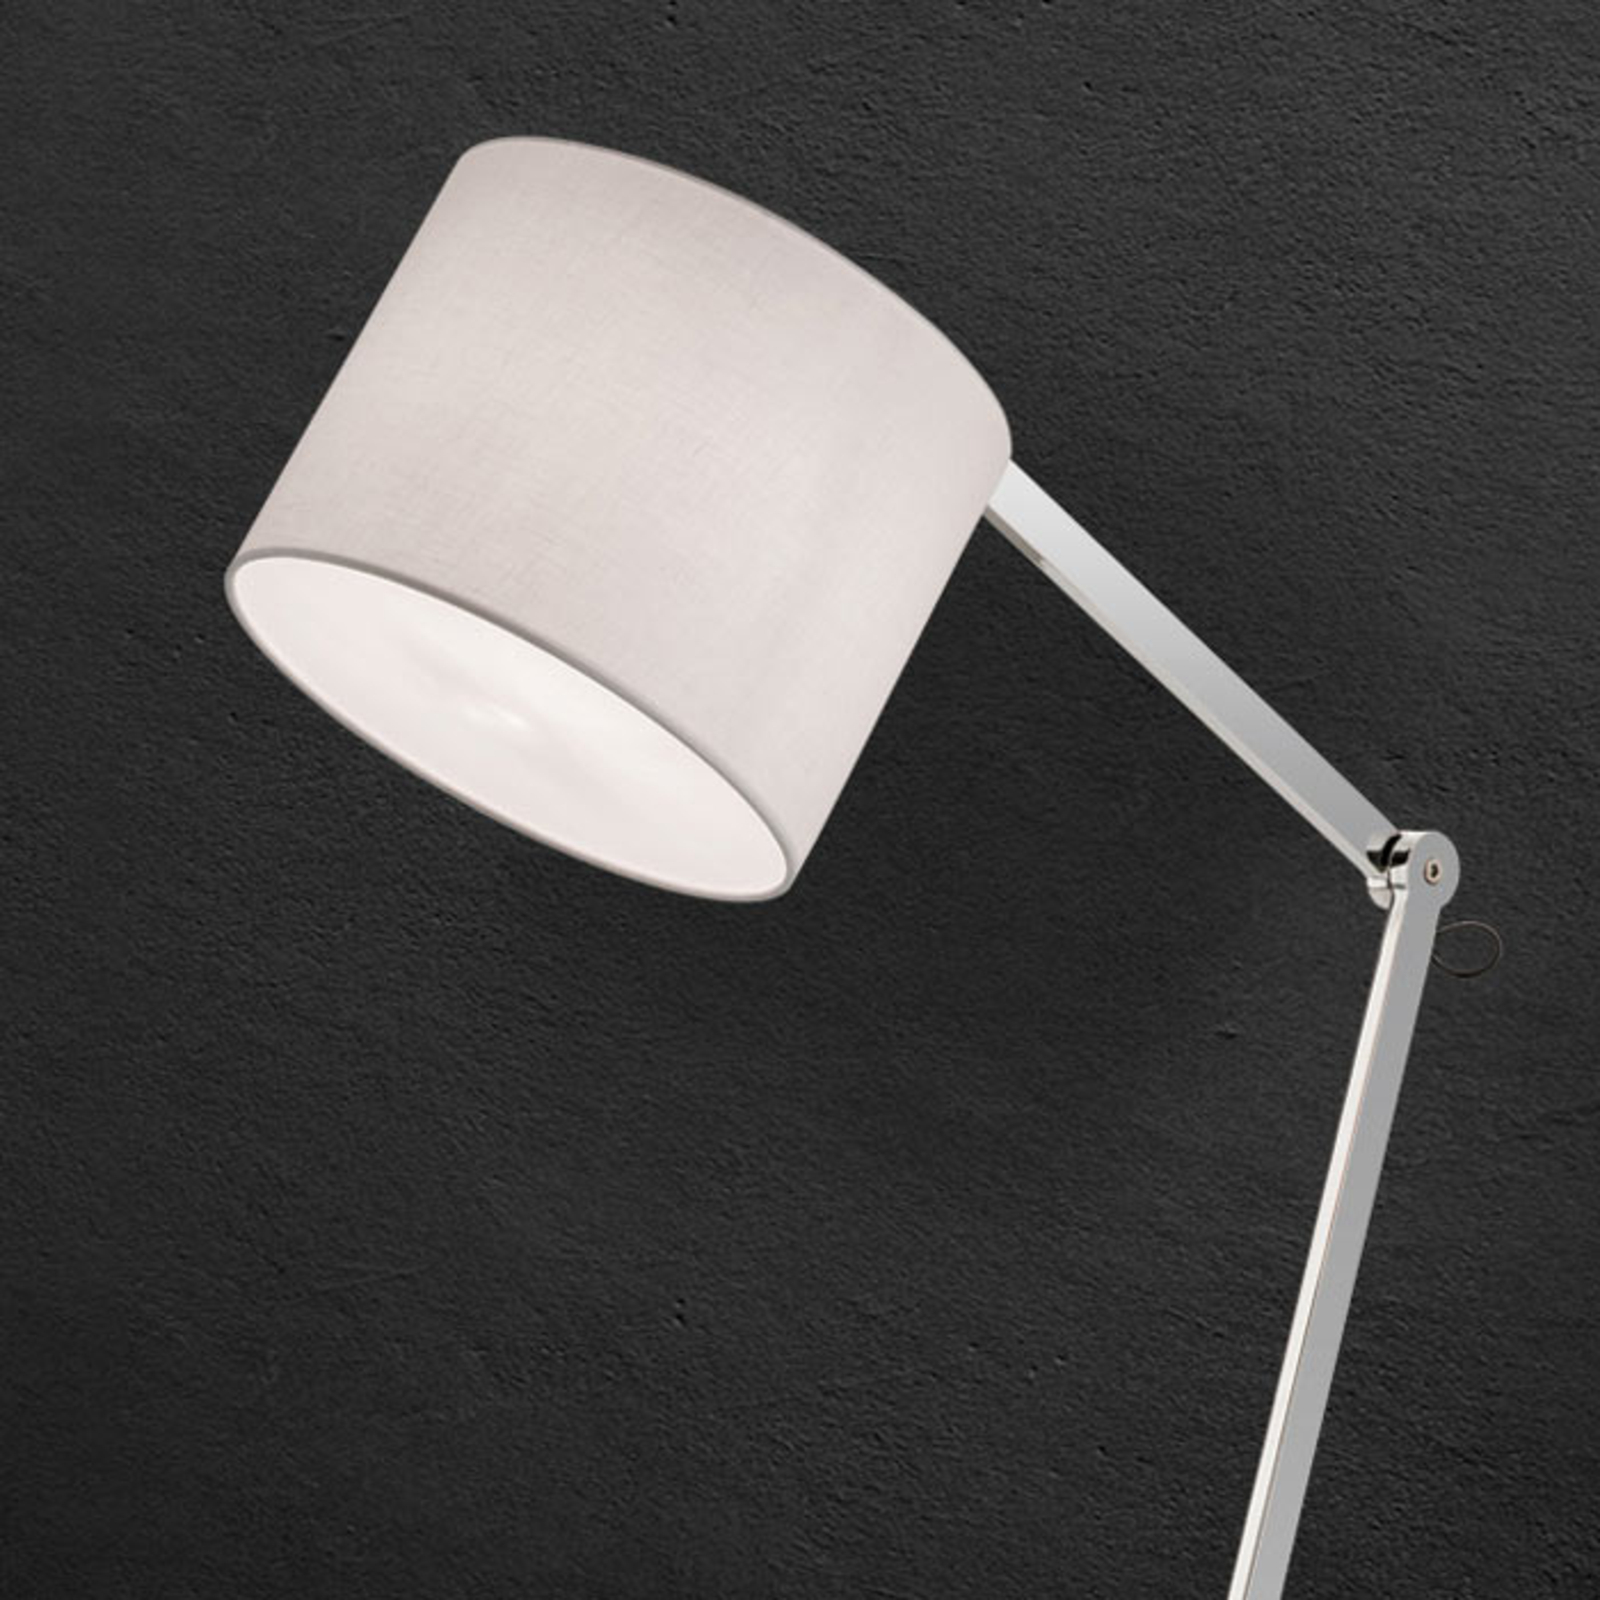 Artak floor lamp with white linen lampshade